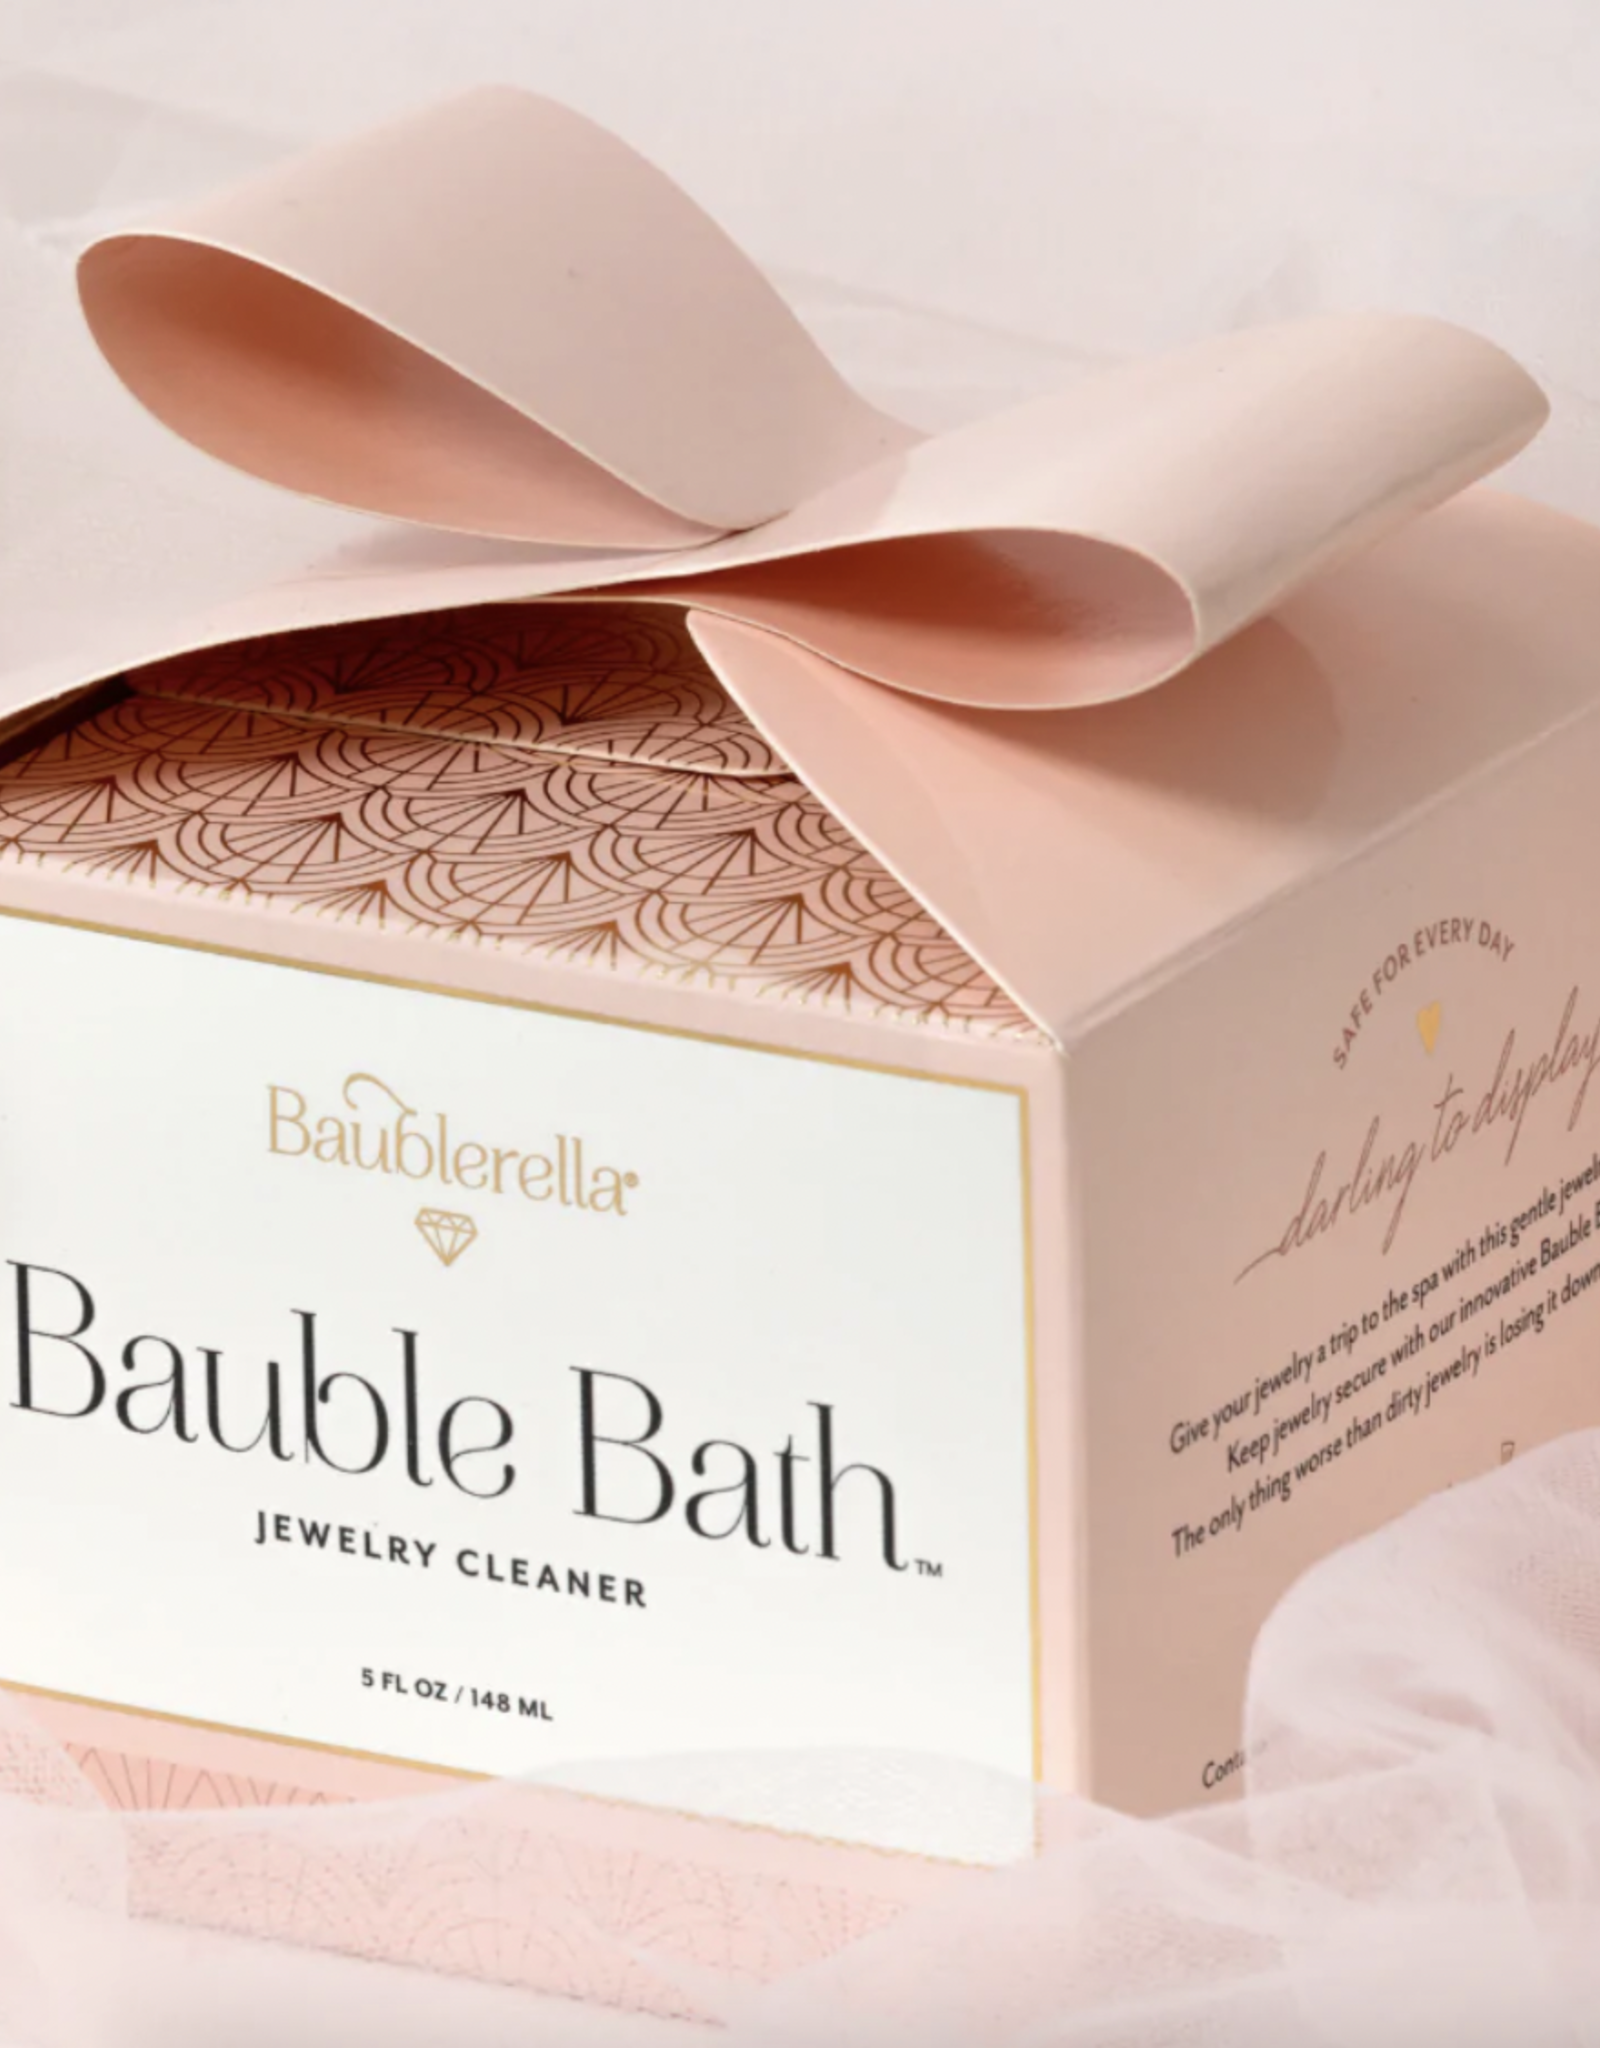 Bauble Bath